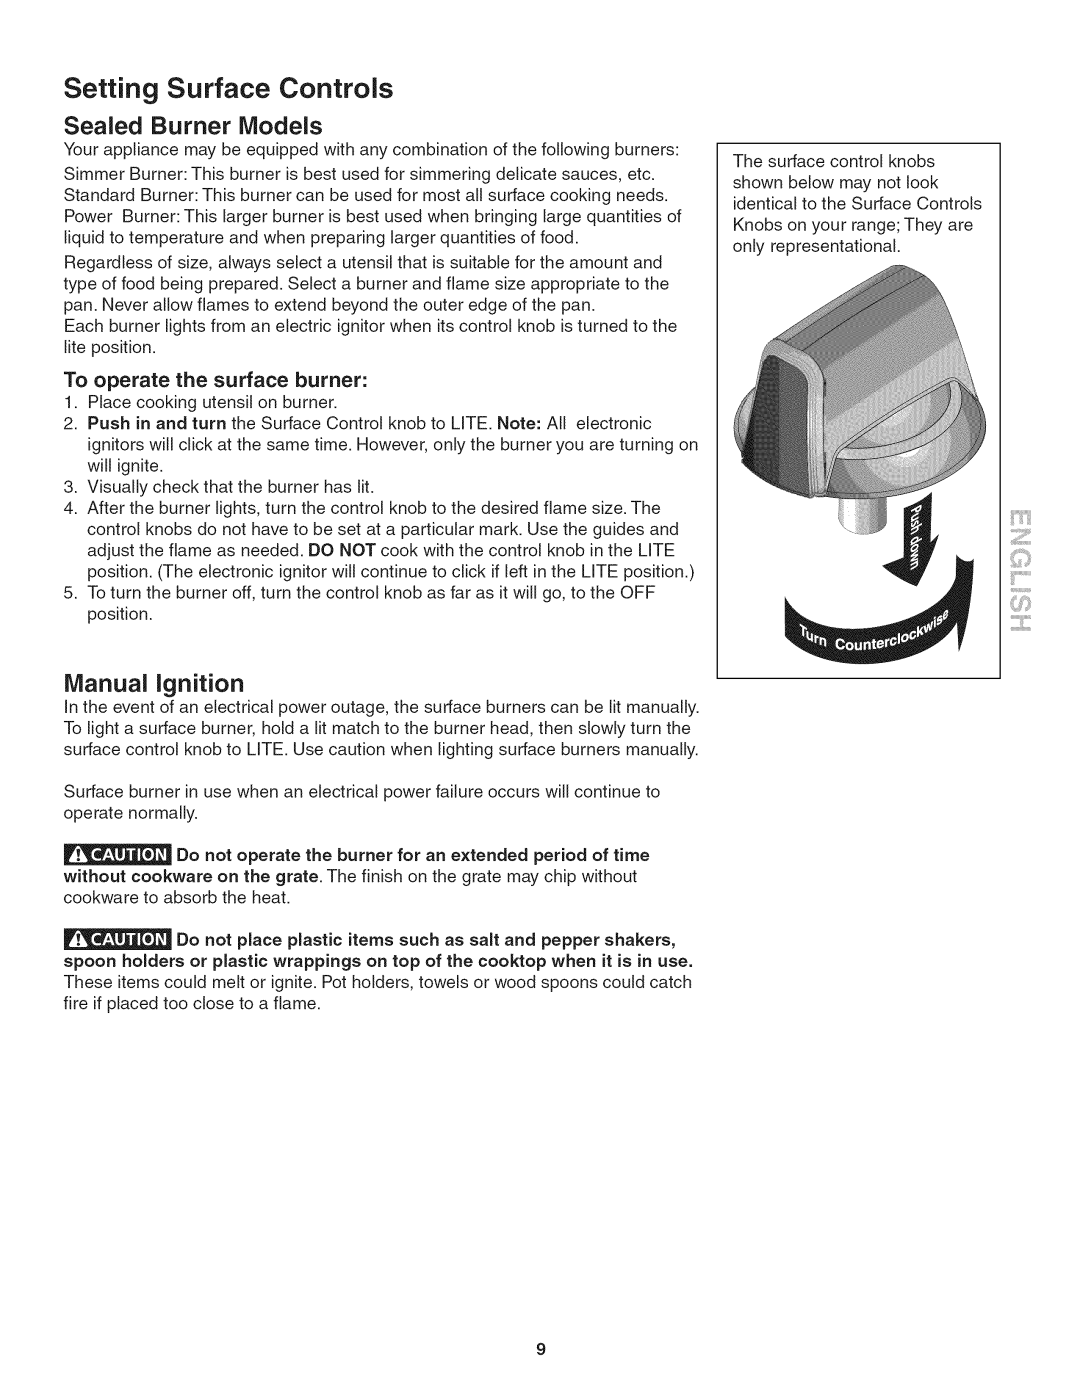 Kenmore 790.324, 3241 manual Setting Surface Controls, Sealed Burner Models 